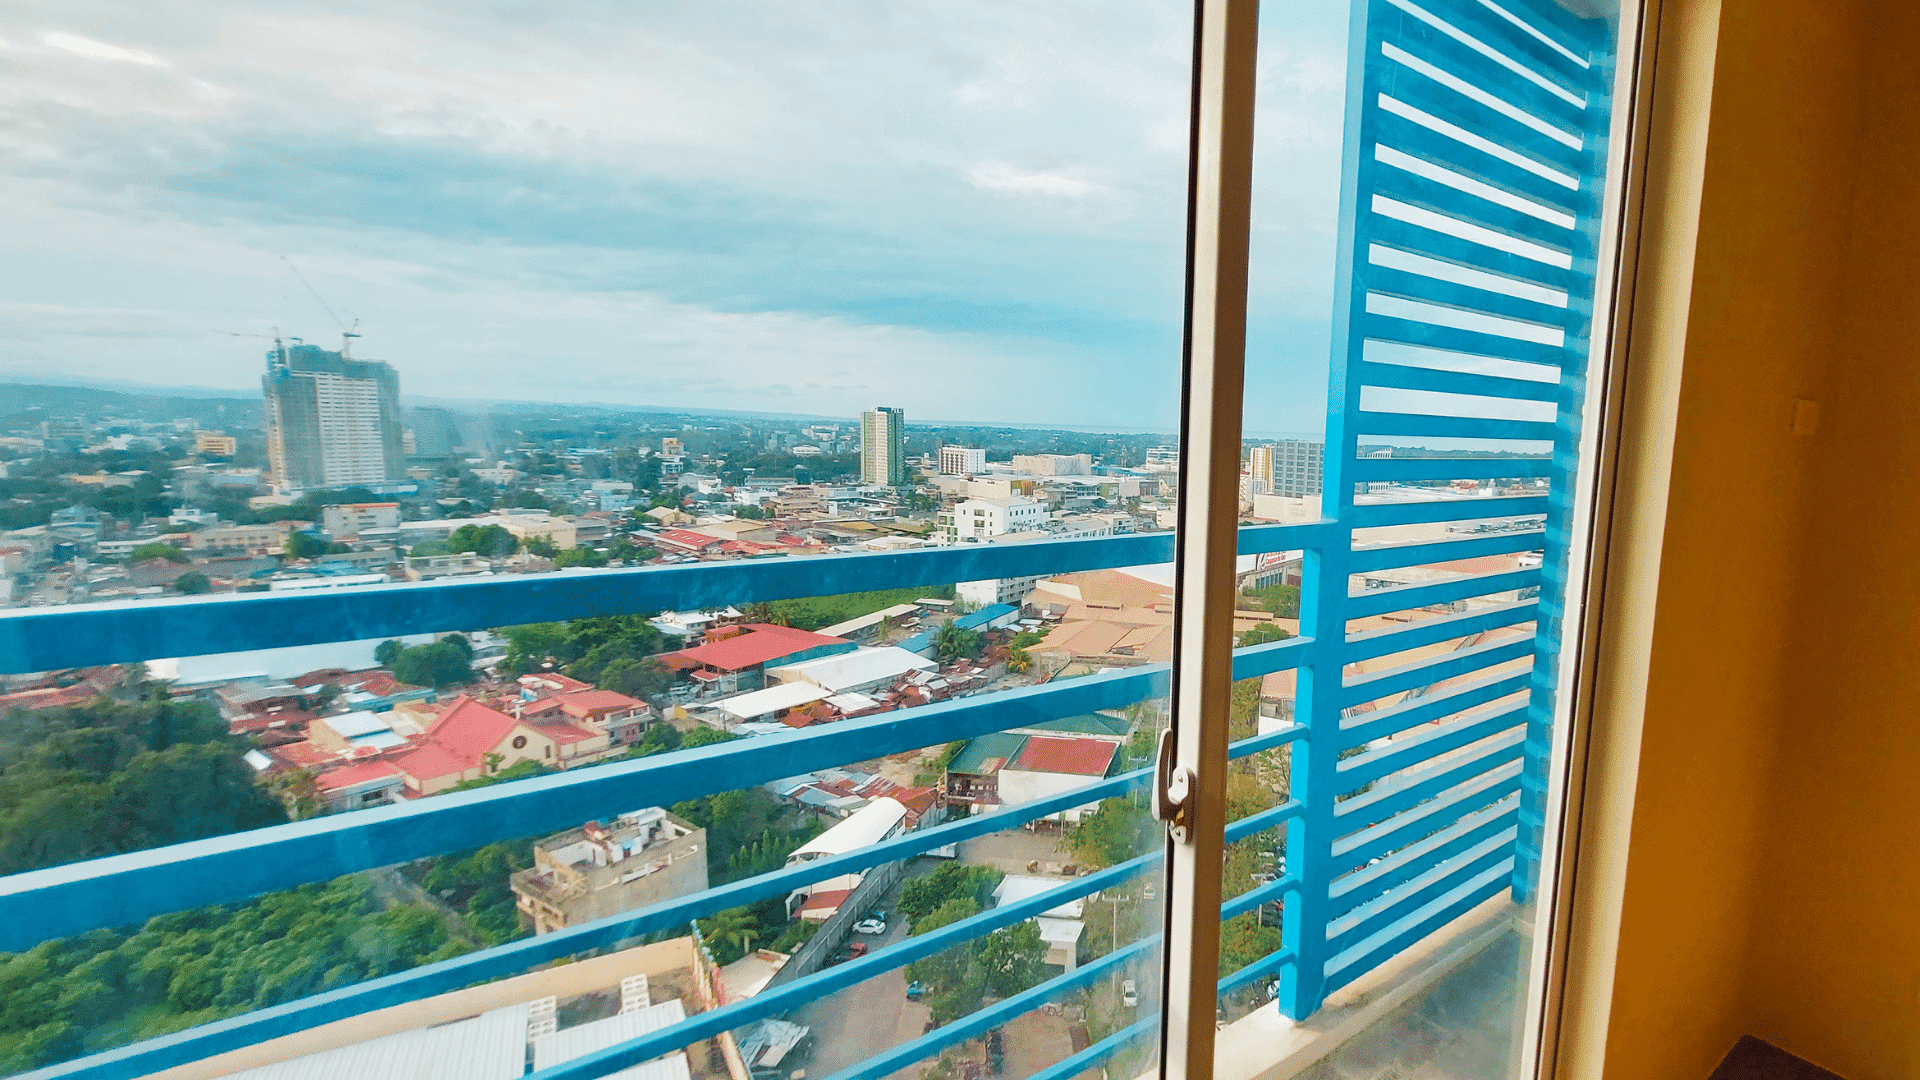 balcony view at the loop condo in cagayan de oro for your potential buyers